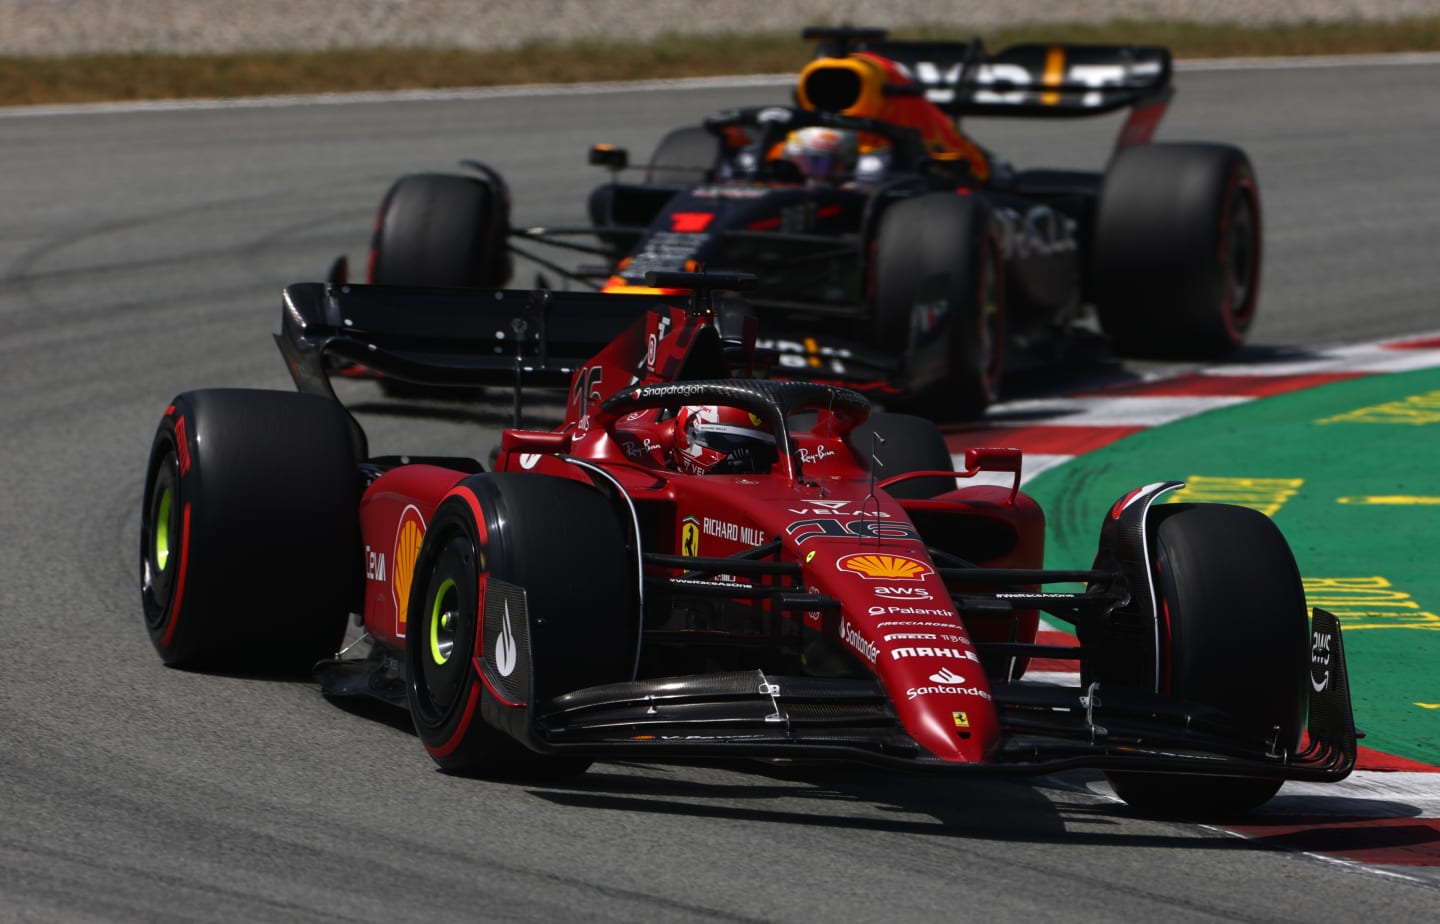 BARCELONA, SPAIN - MAY 22: Charles Leclerc of Monaco driving the (16) Ferrari F1-75 leads Max